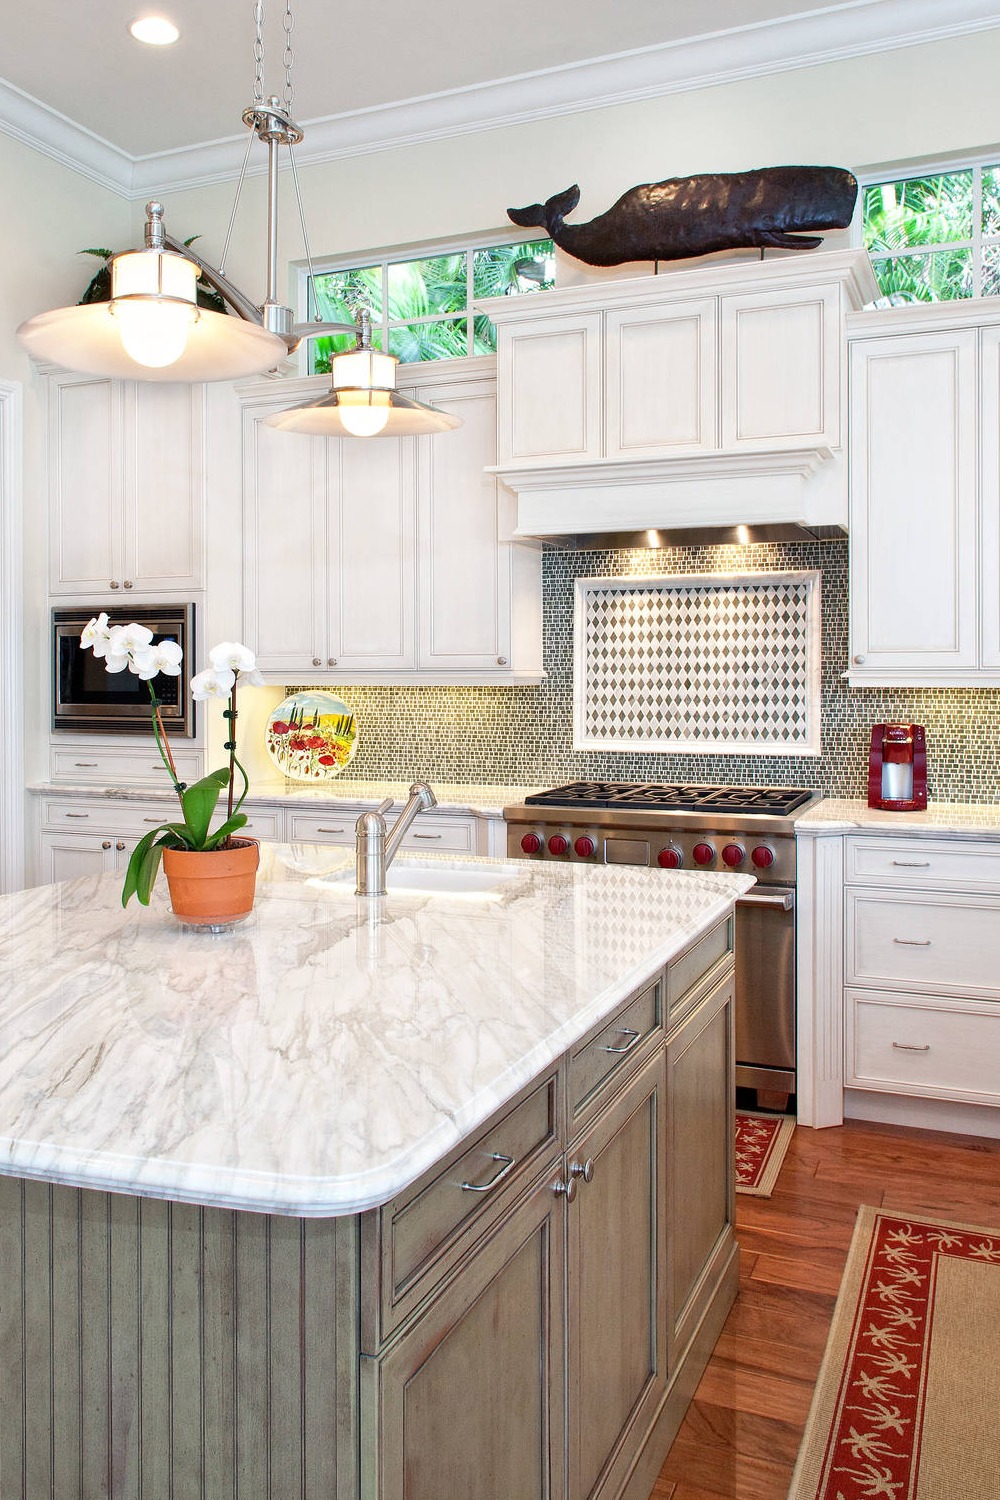 White Granite Countertops Cabinets Multi Color Mosaic Tile Backsplash Hardwood Floor